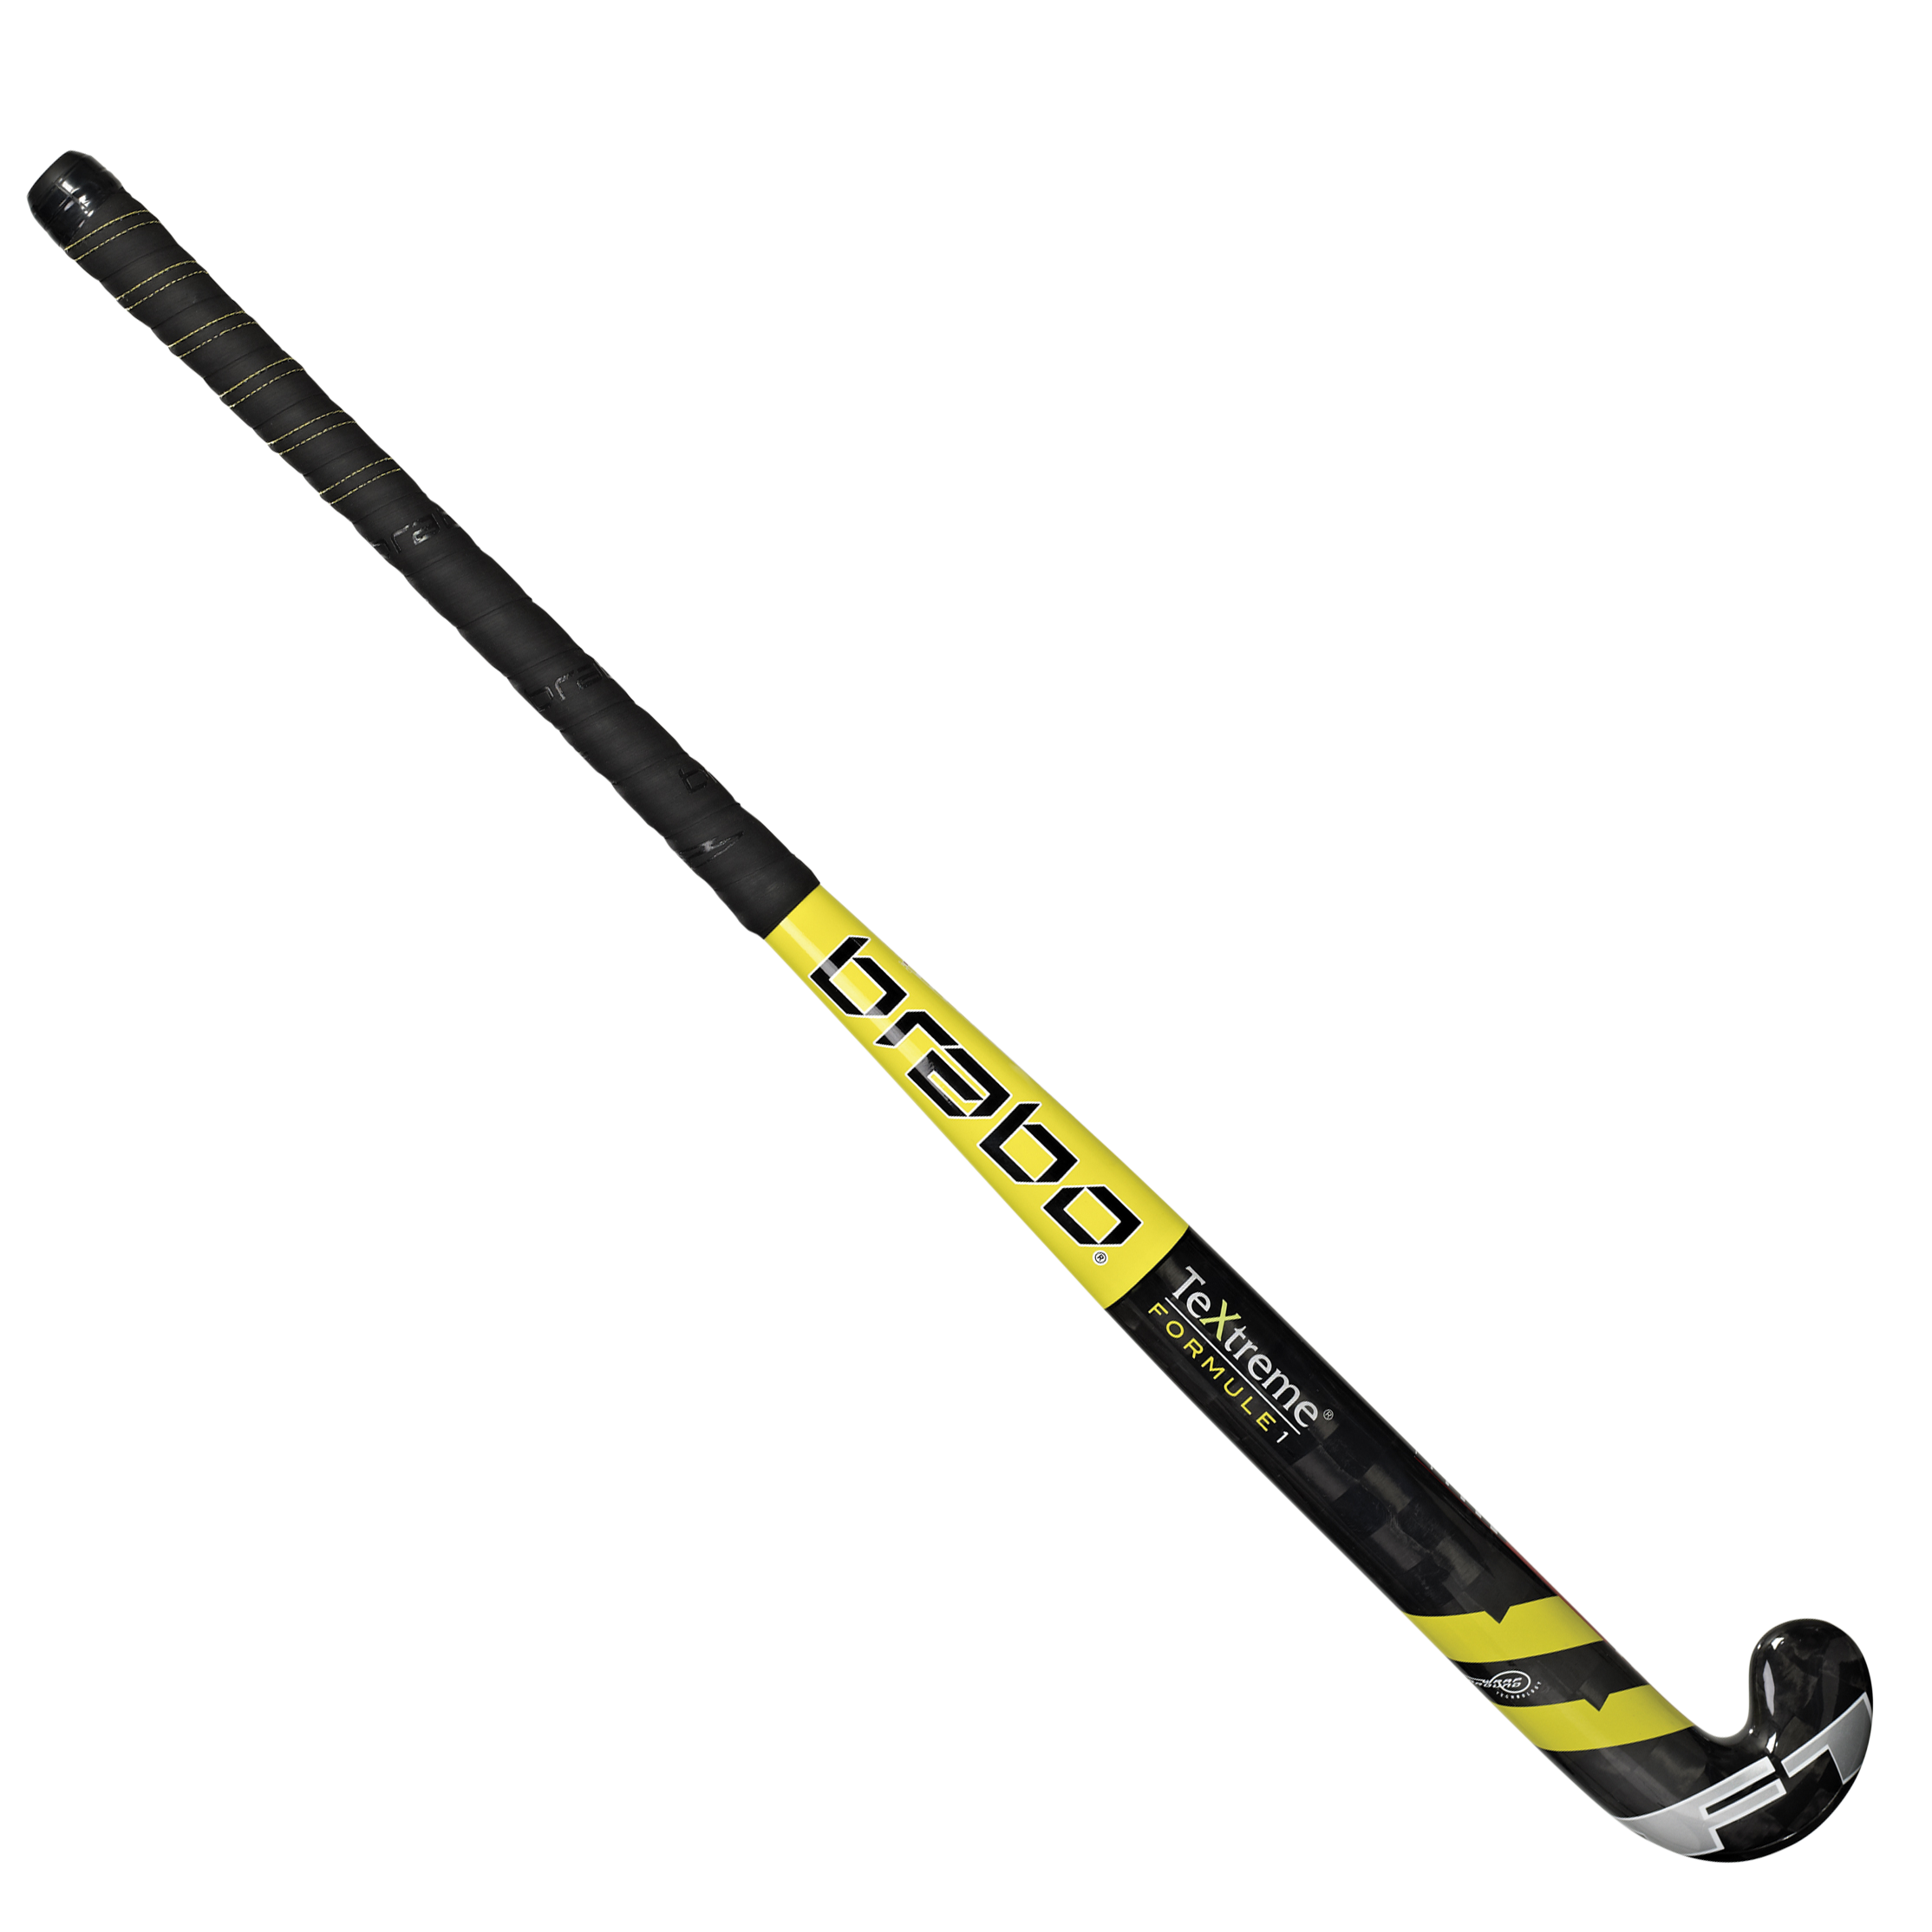 hockey clipart long stick